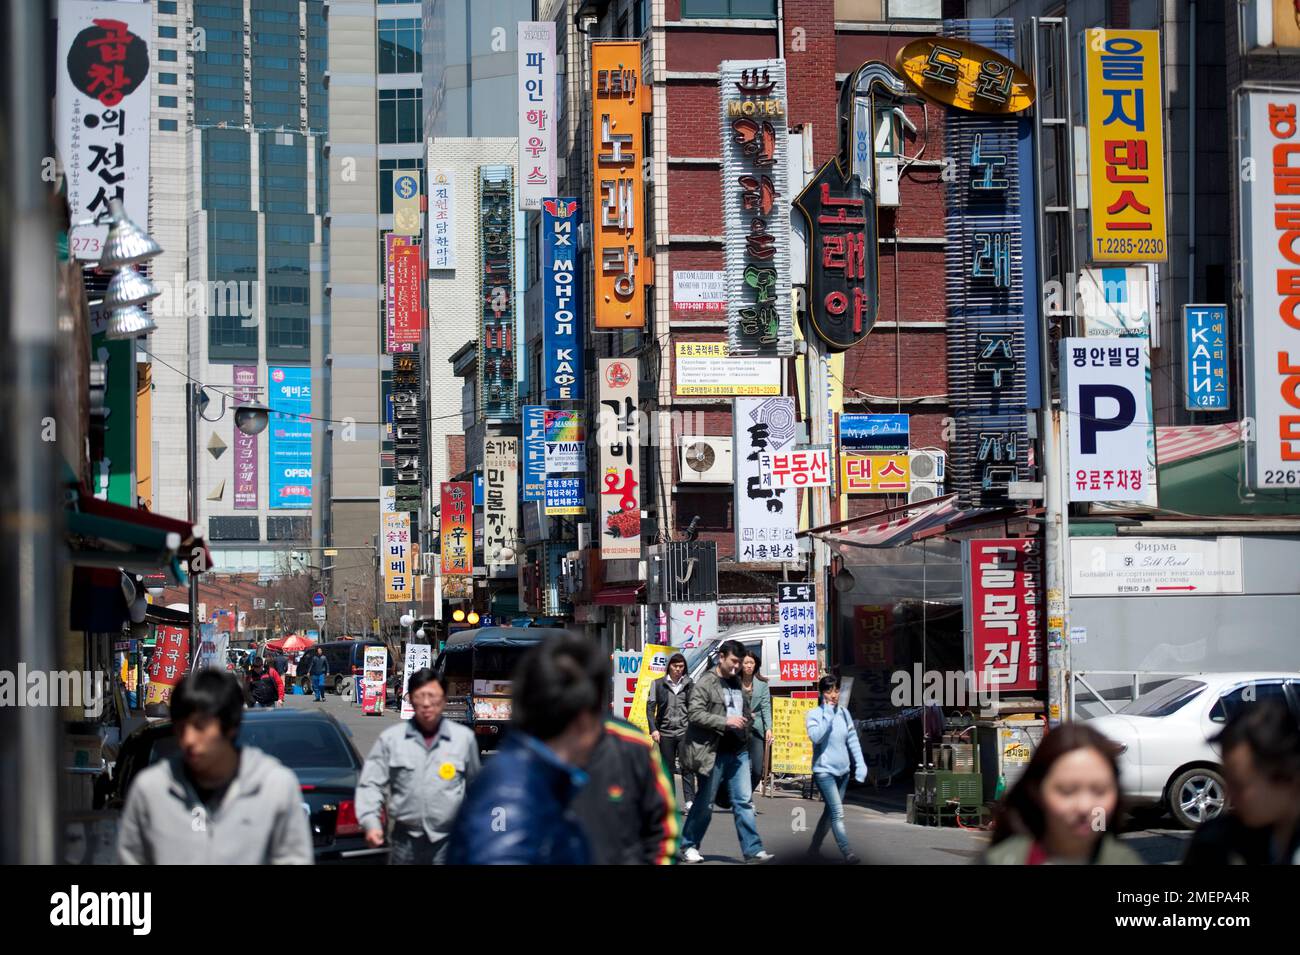 South Korea, Seoul, Dongdaemun, street signage Stock Photo